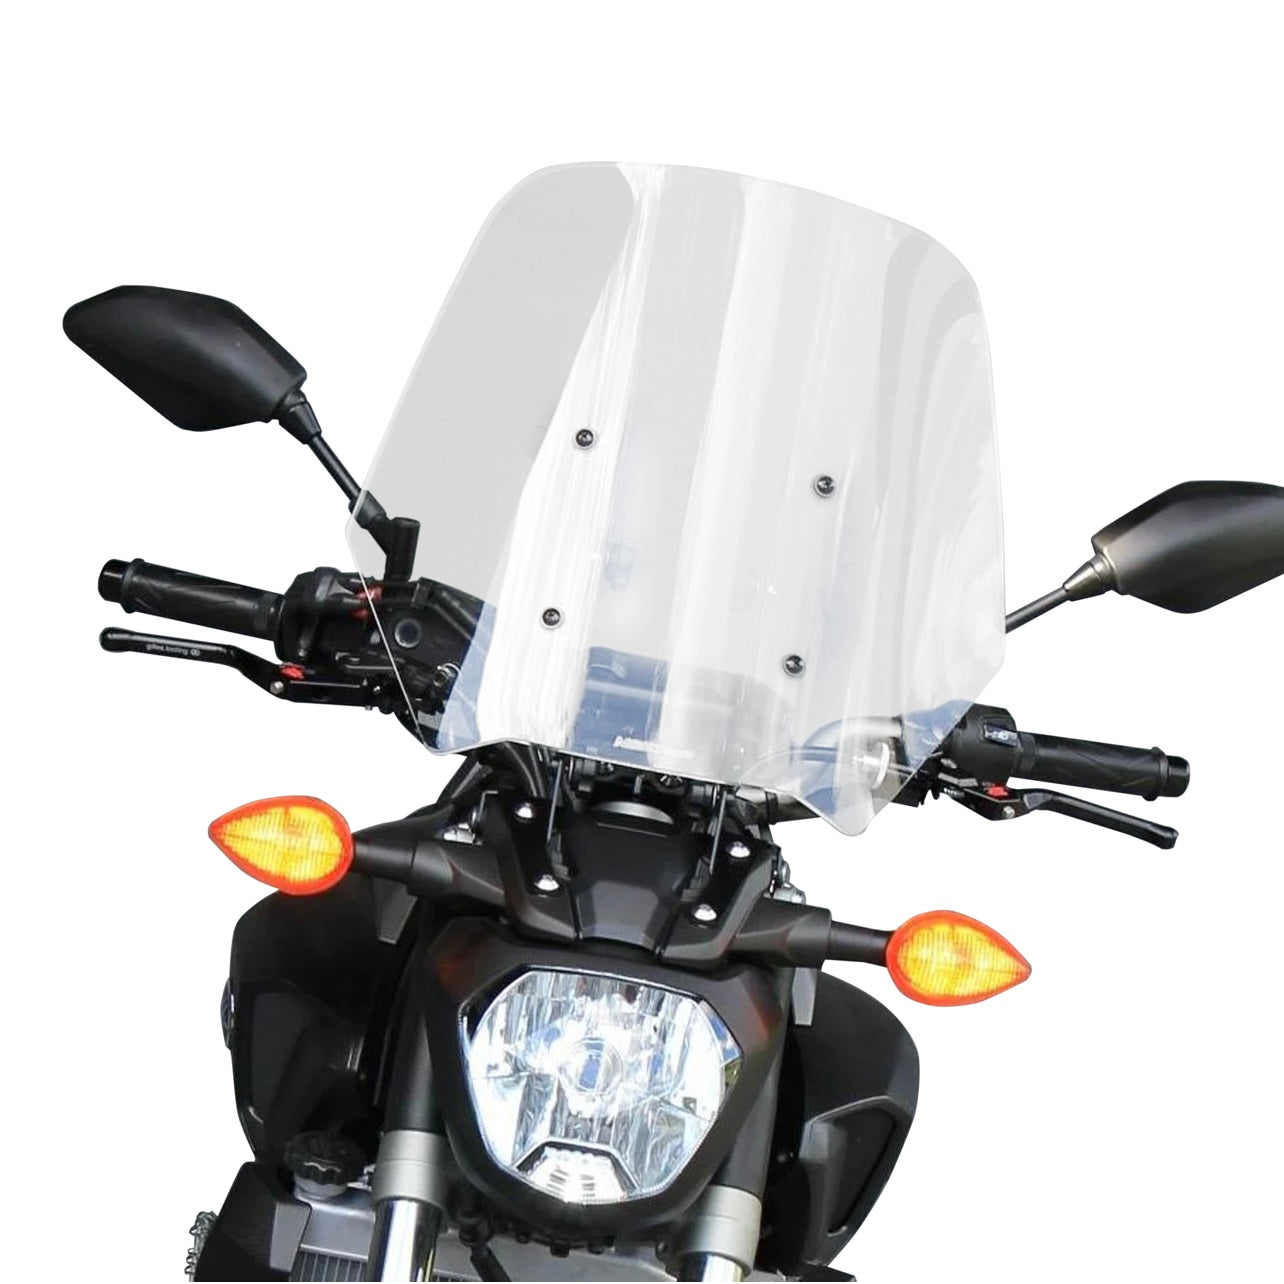 Adjustable Windshield System for Yamaha FZ-07 (2014 - 2017)